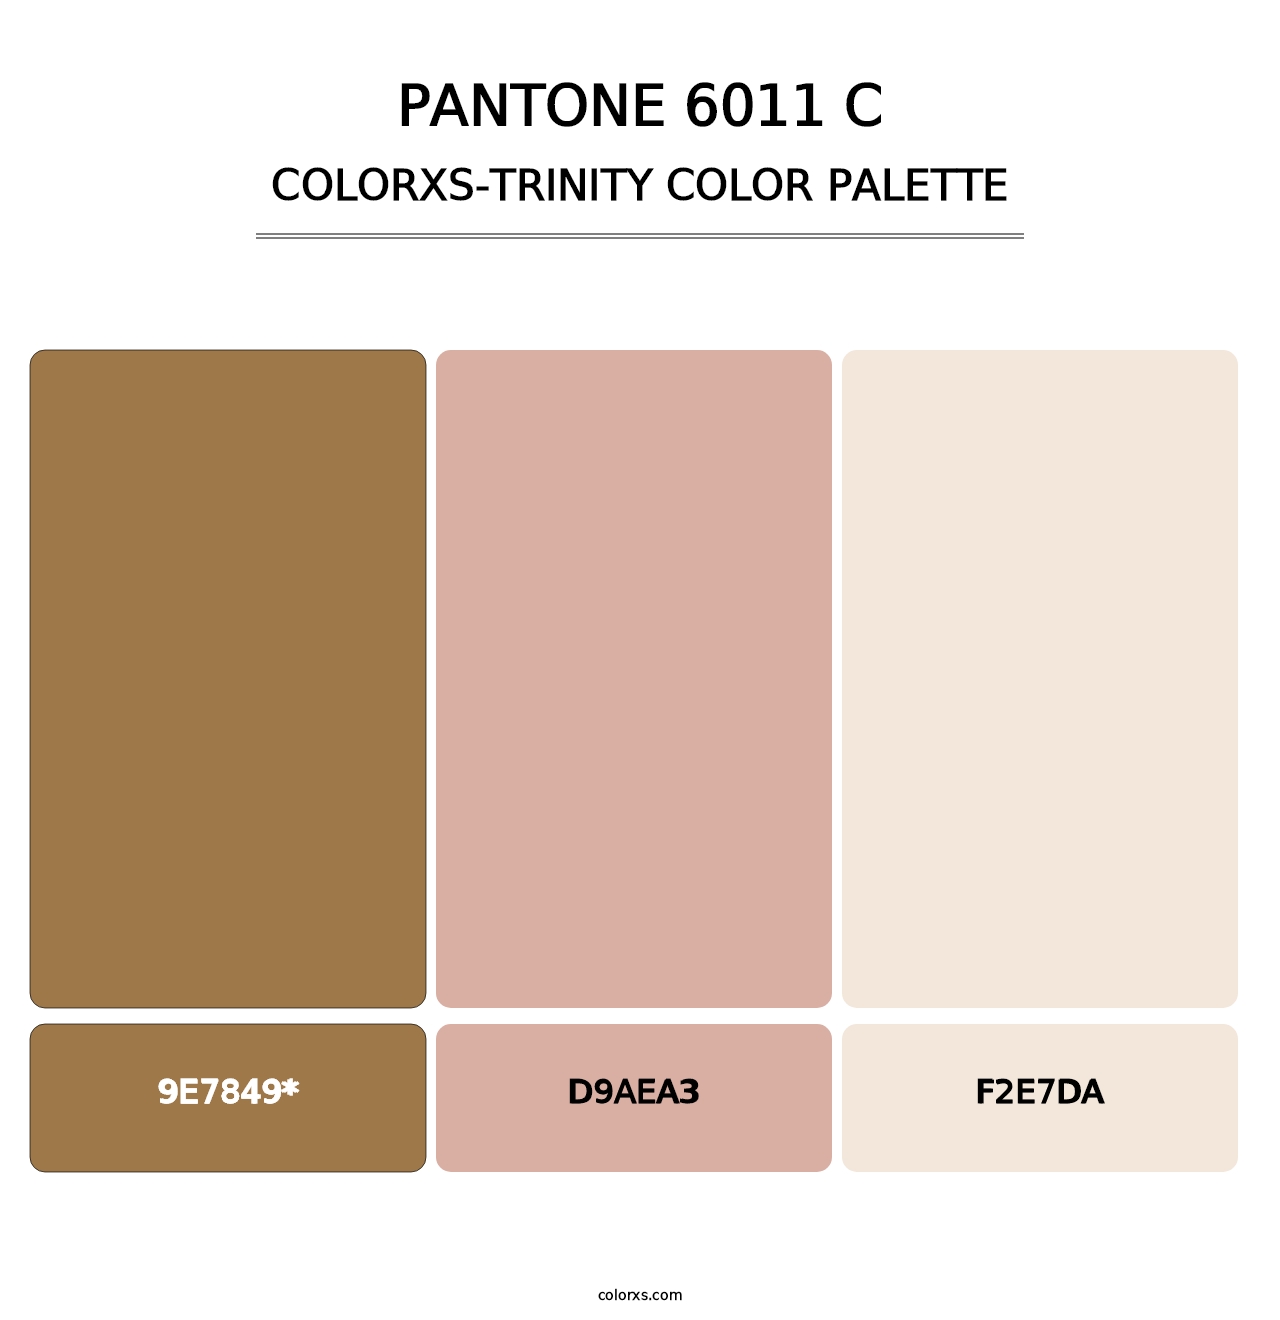 PANTONE 6011 C - Colorxs Trinity Palette